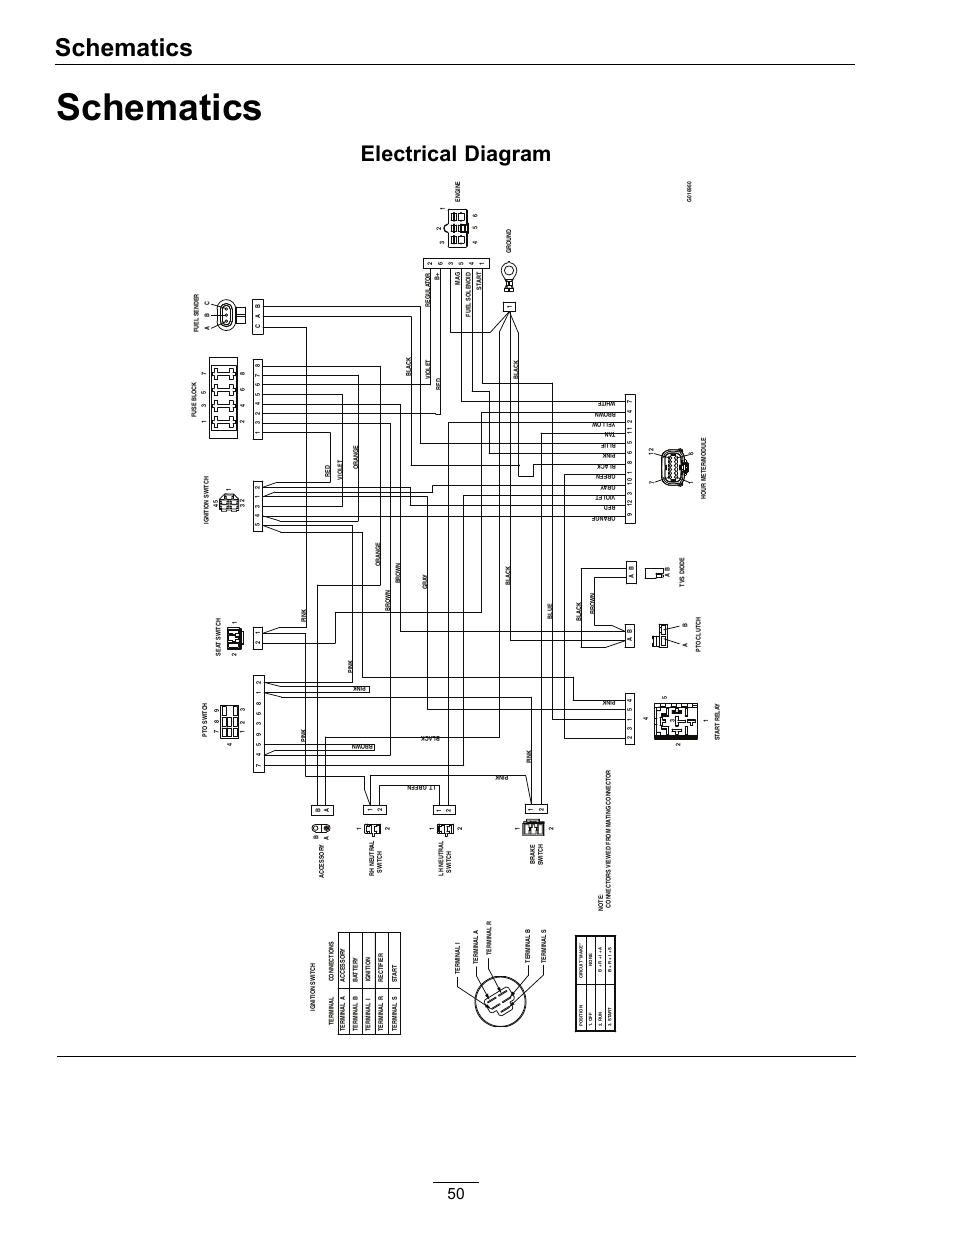 honeywell thermostat rthl3550d wiring